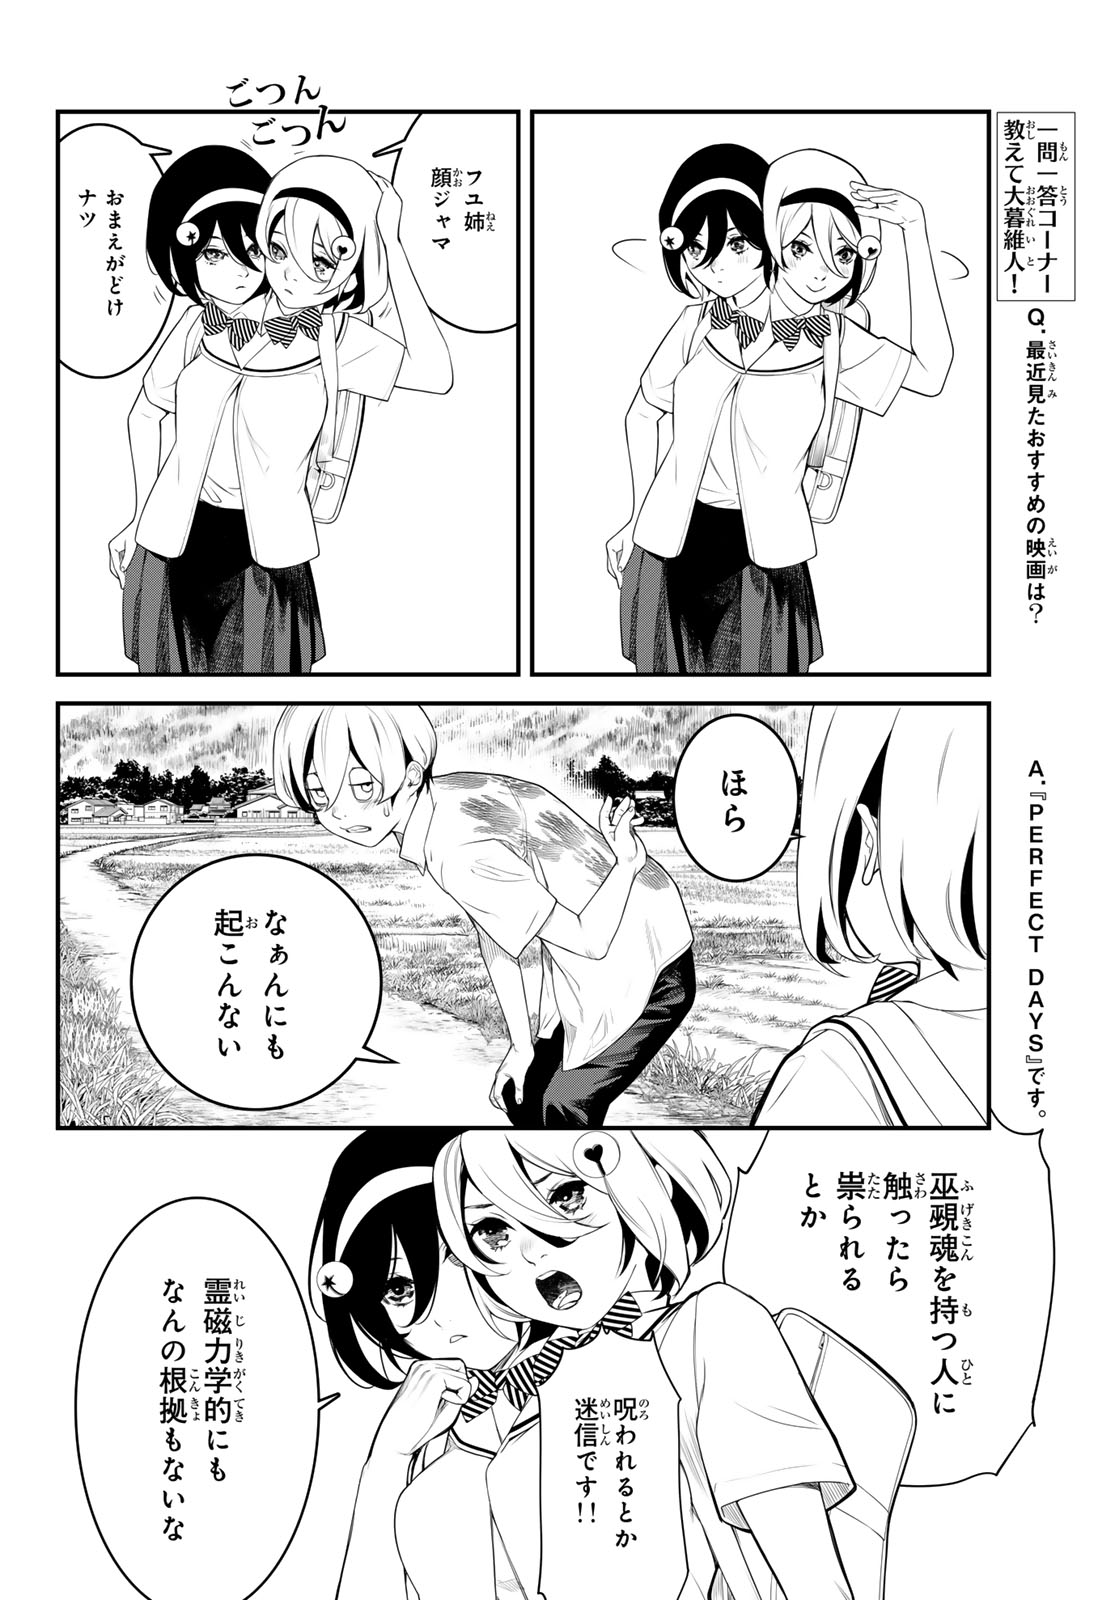 Kaijin Fugeki - Chapter 2 - Page 10